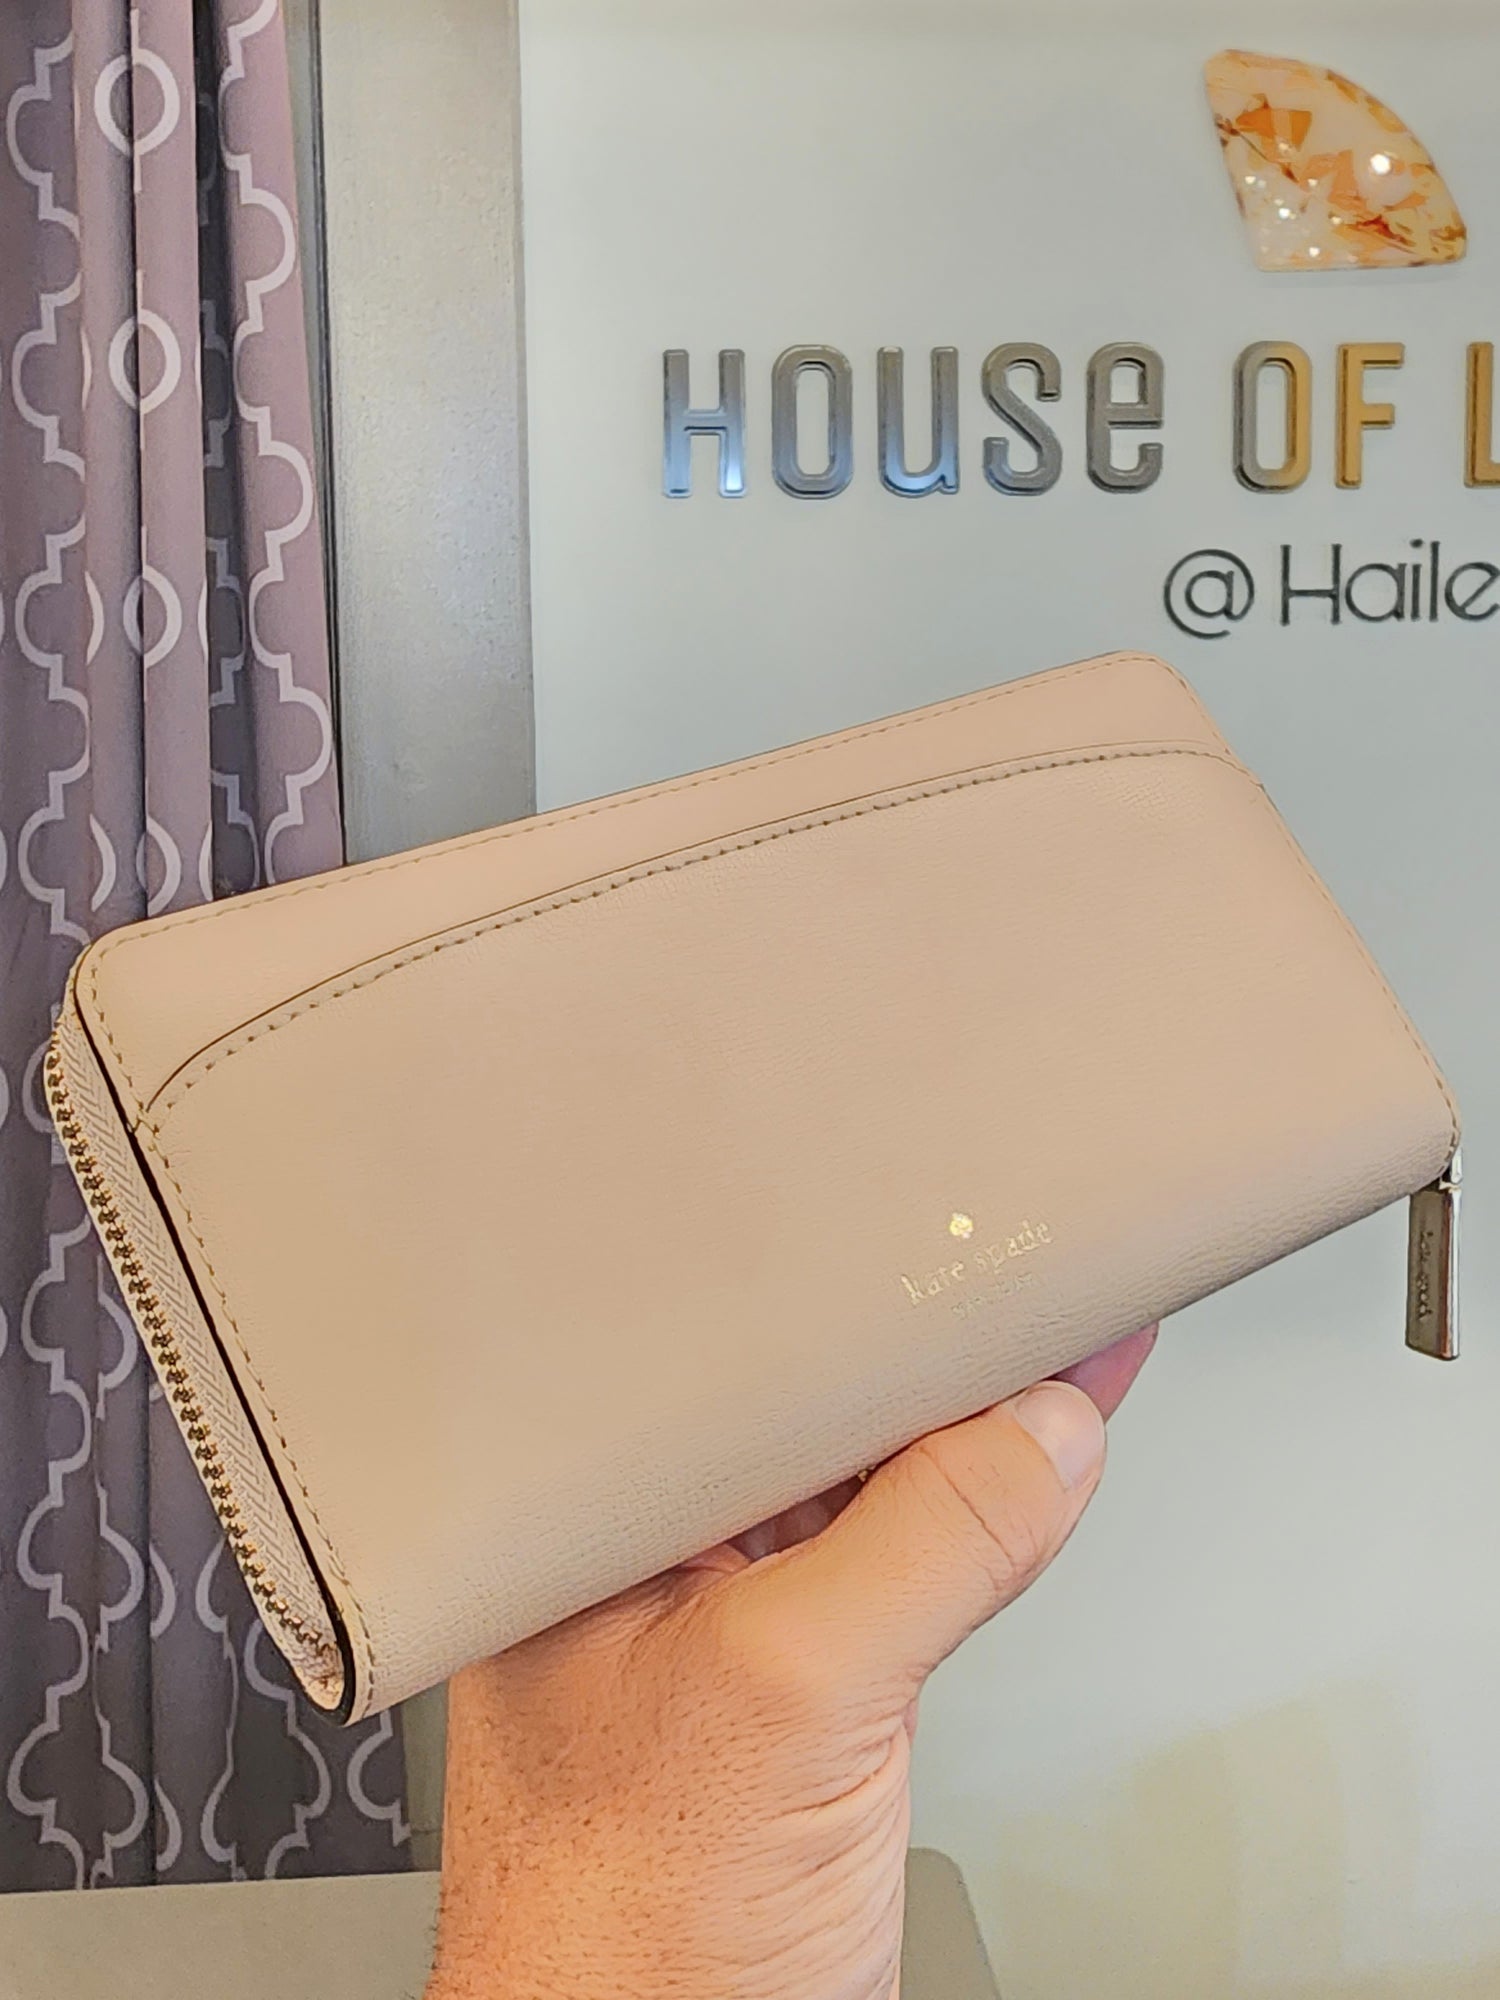 Designer Handbags & Accessories – HOUSE of LUXURY @ Haile